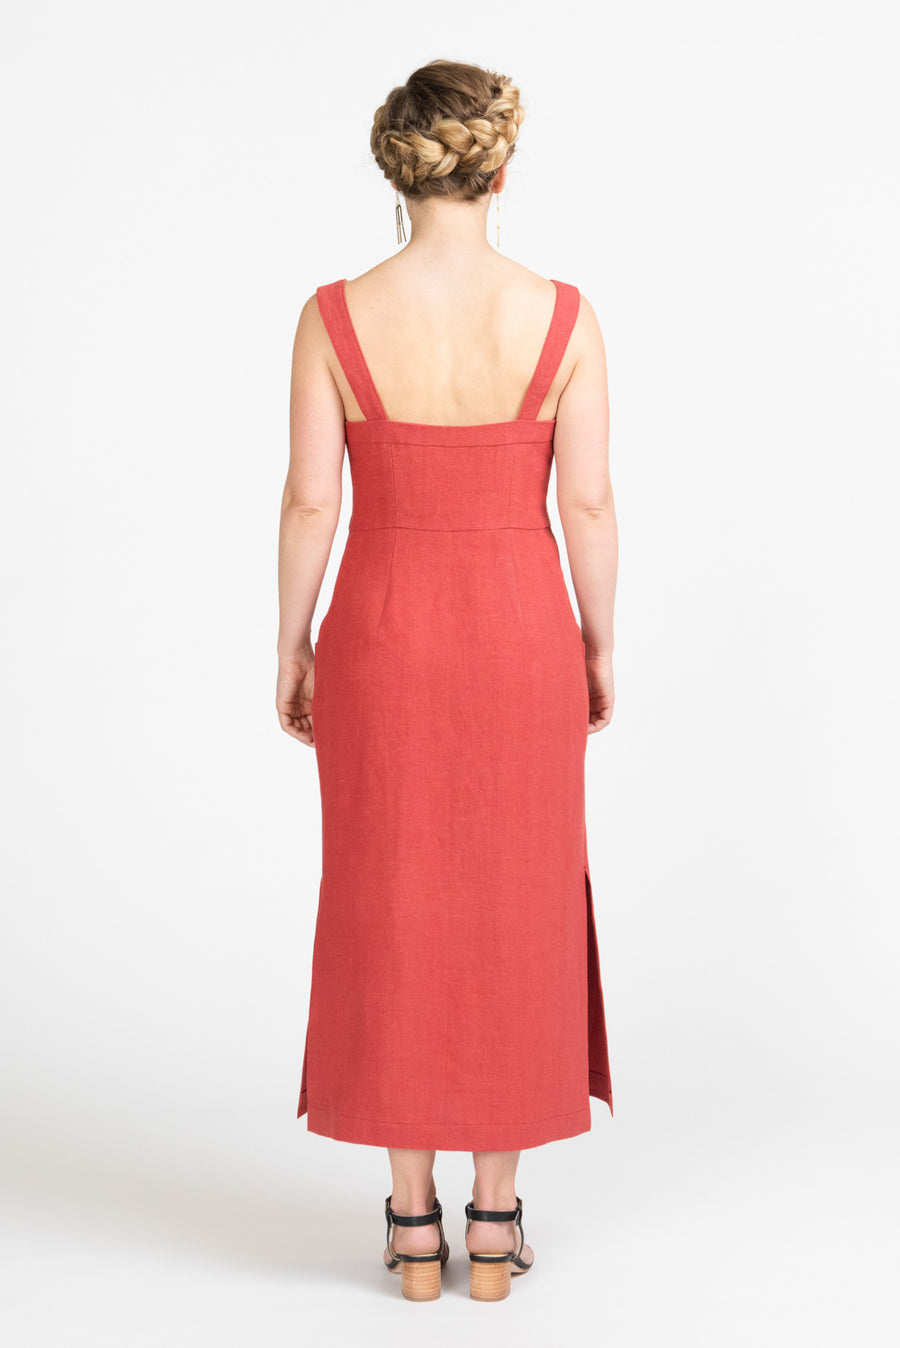 Fiona Sundress Pattern // Princess seamed summer dress pattern // Closet Core Patterns